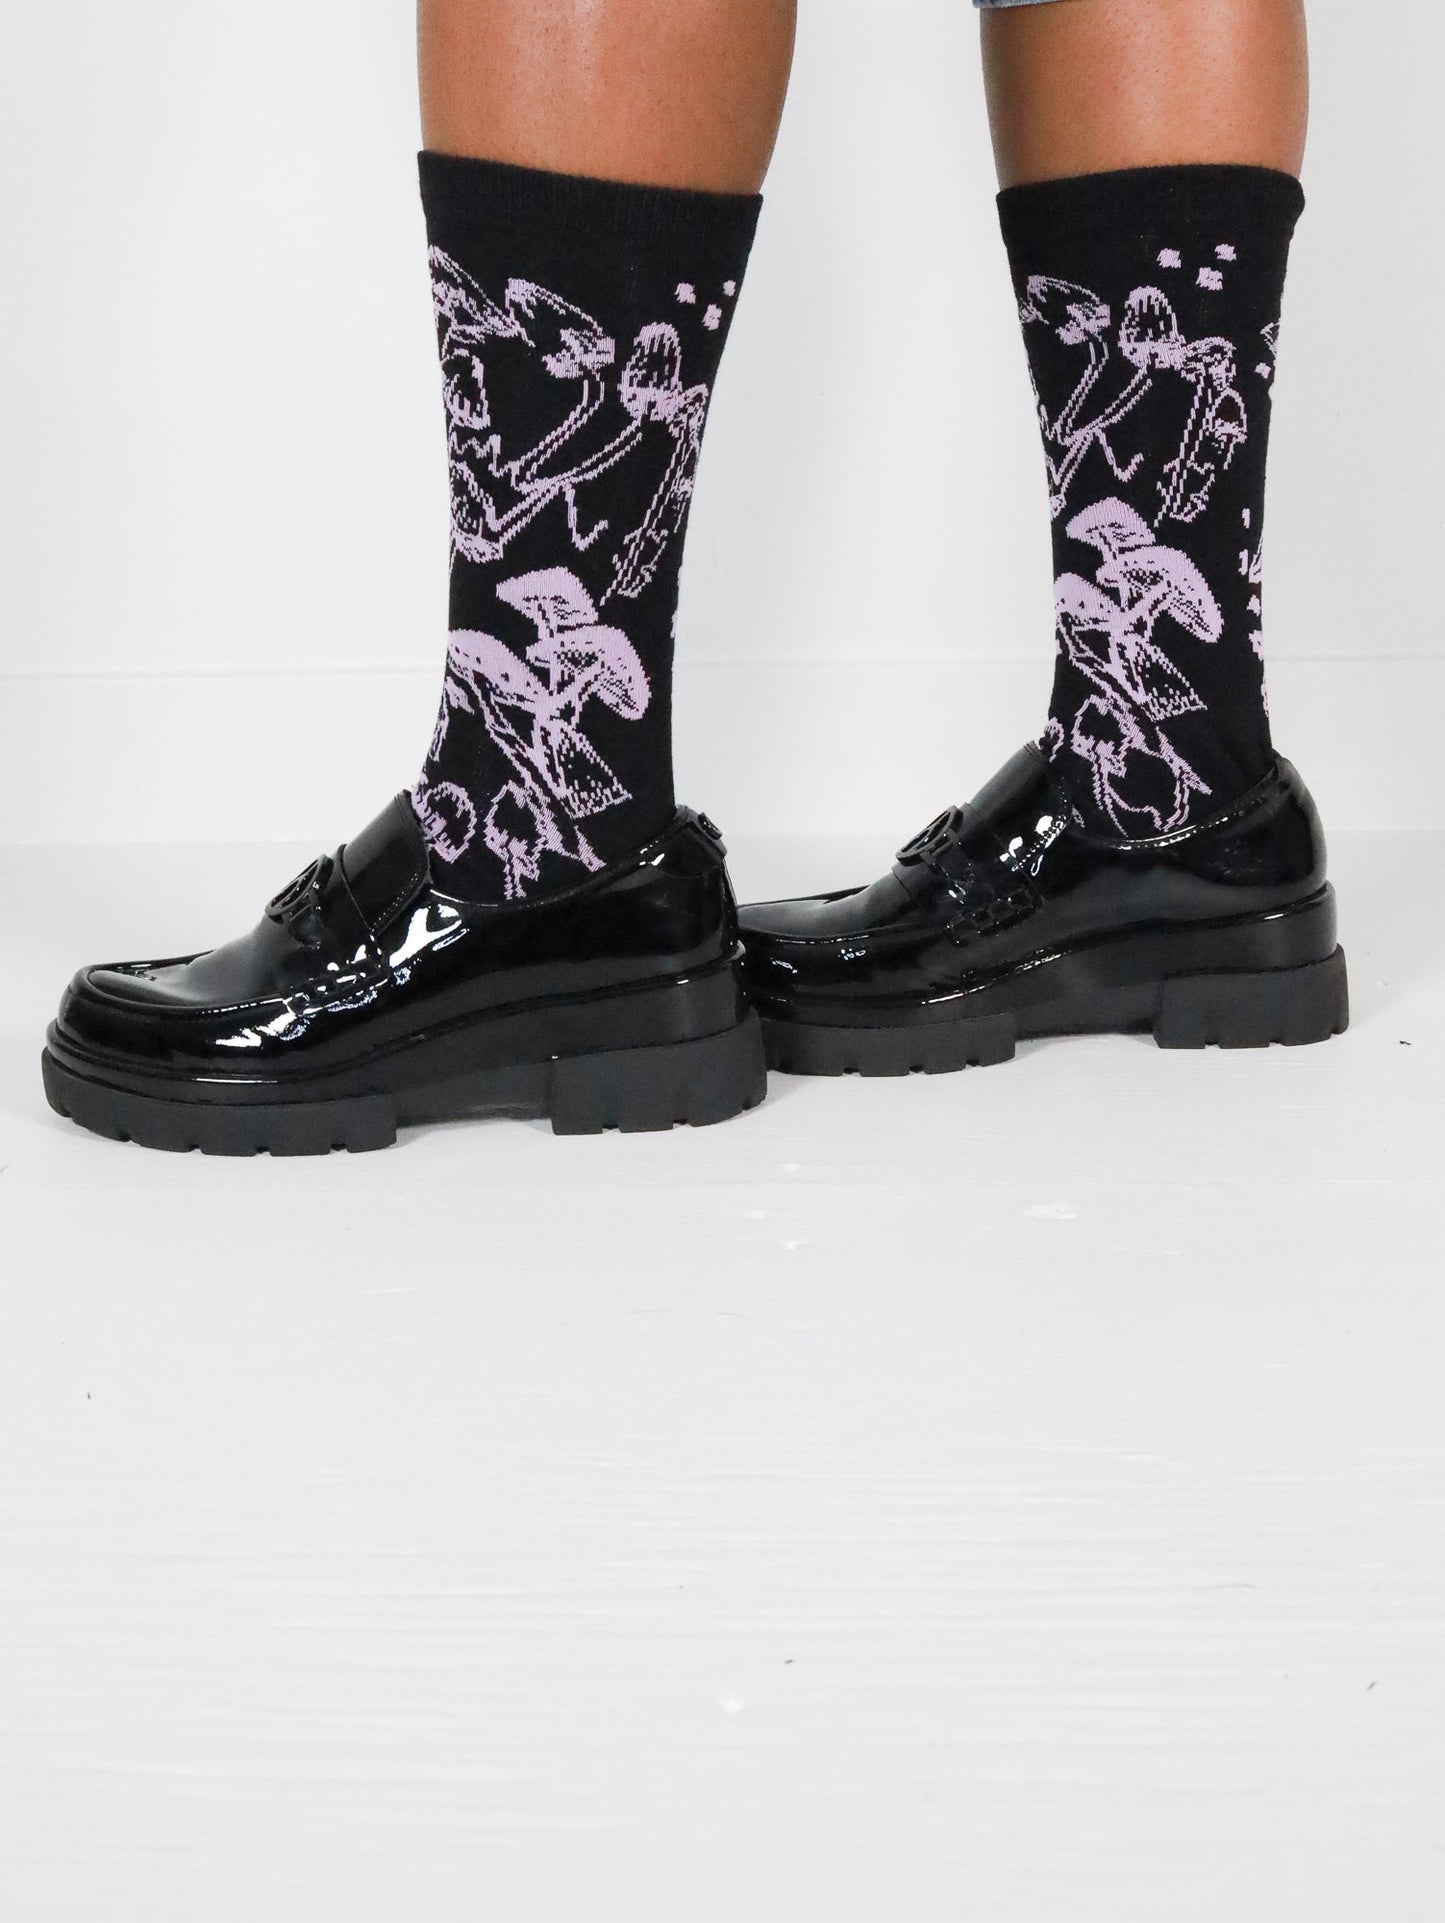 Violet Shroom Socks